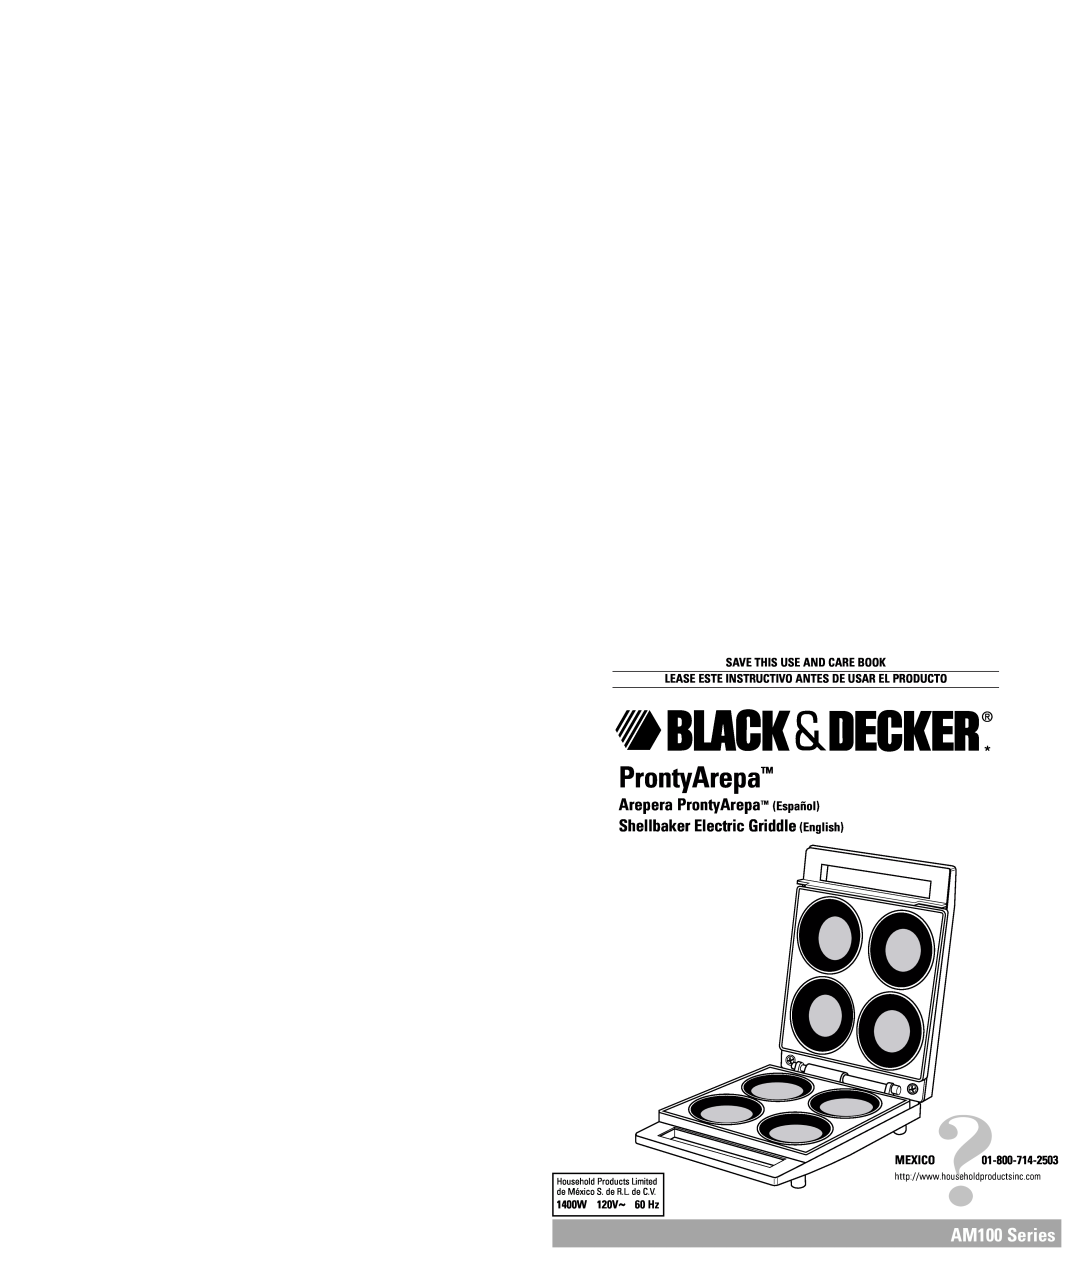 Black & Decker AM100 Series warranty Arepera ProntyArepa Español Shellbaker Electric Griddle English 